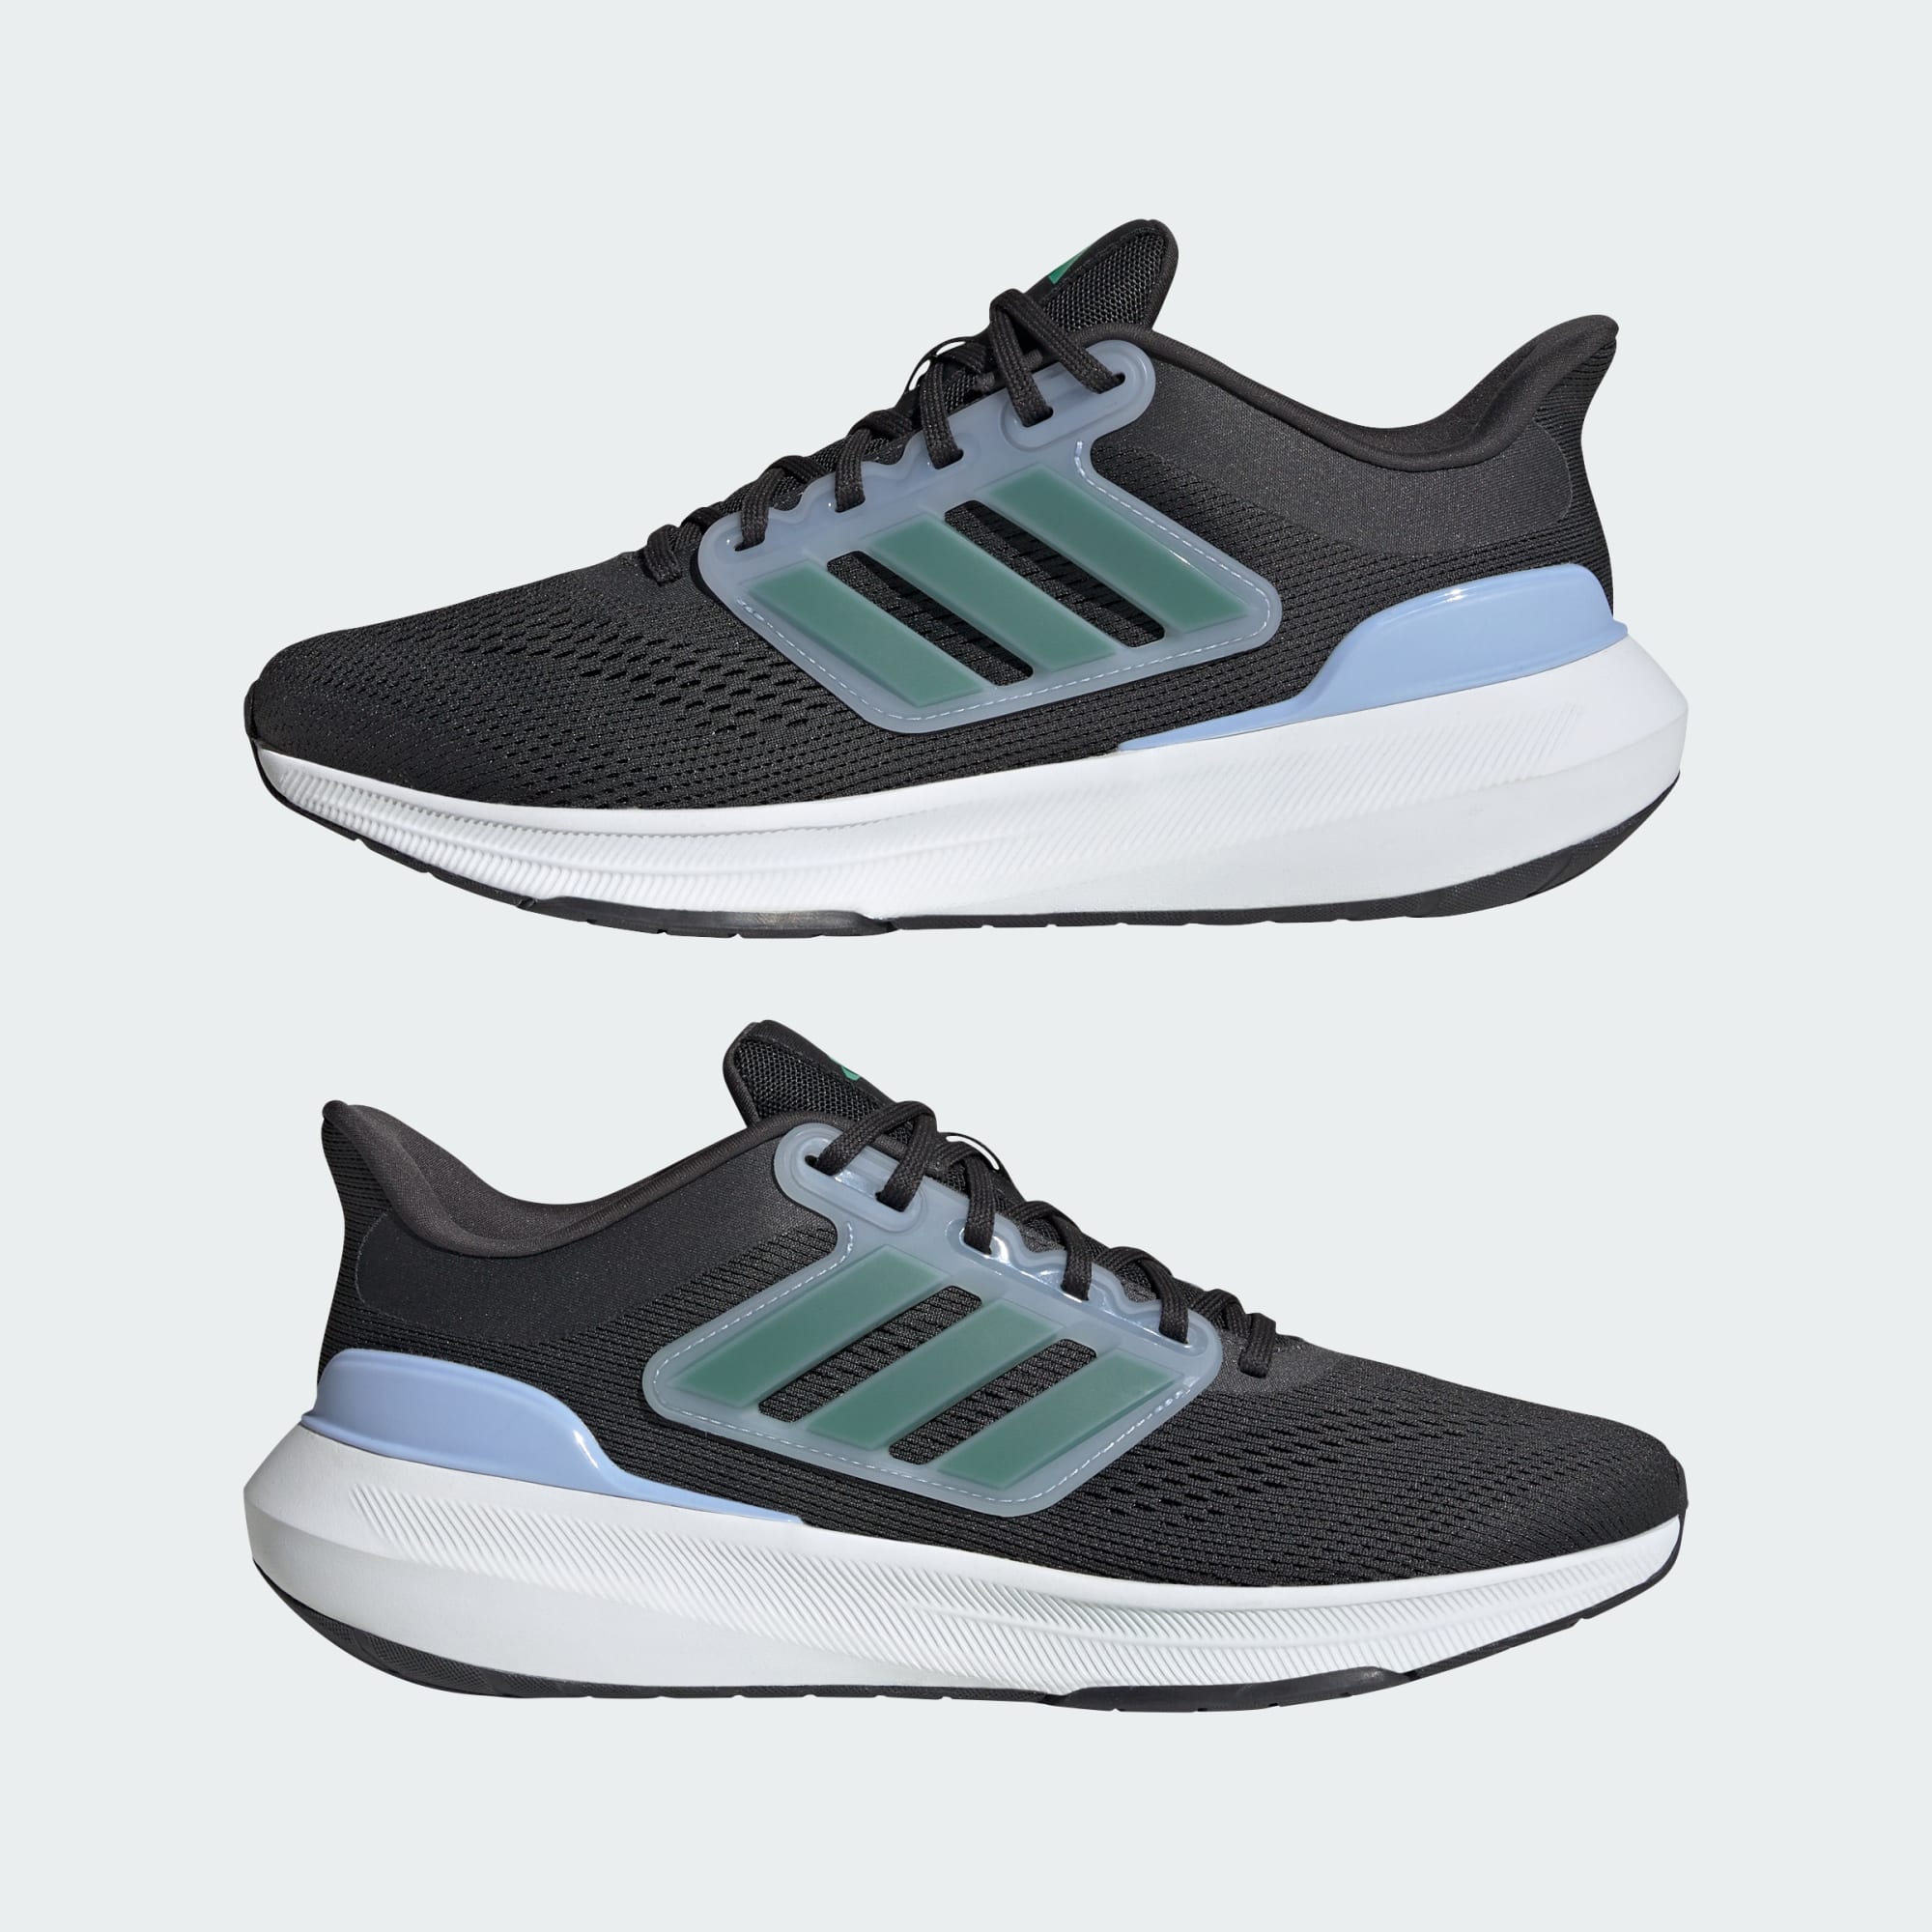 adidas Men's Ultrabounce Running Shoes (Standard, Carbon / Court Green / Core Black) $30.80 + Free Shipping